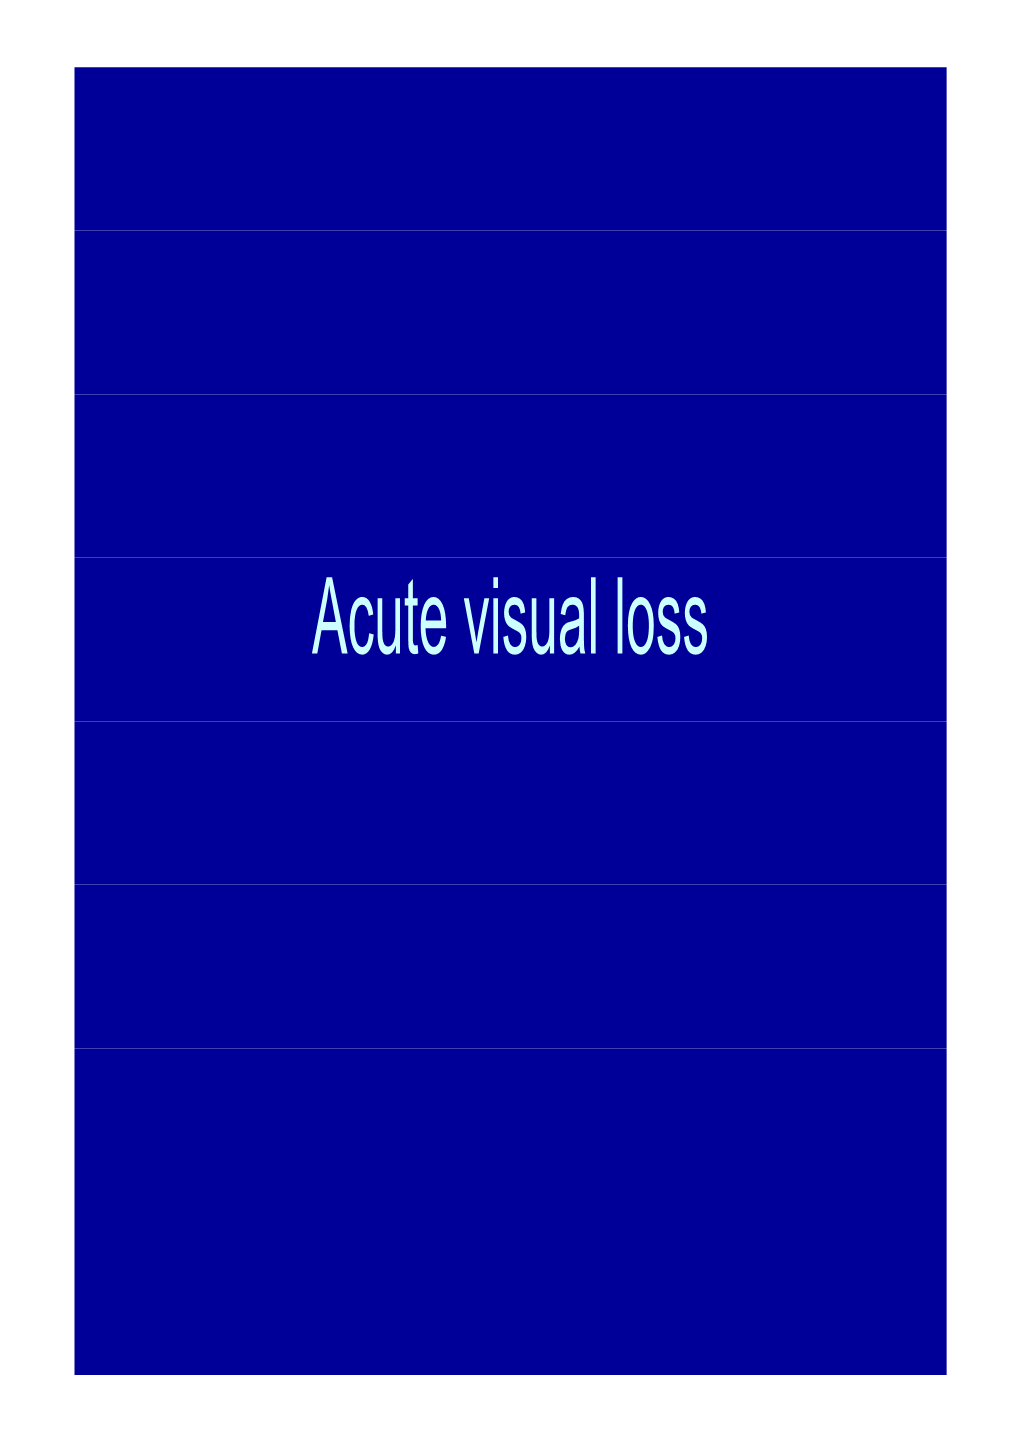 Acute Visual Loss Objectives